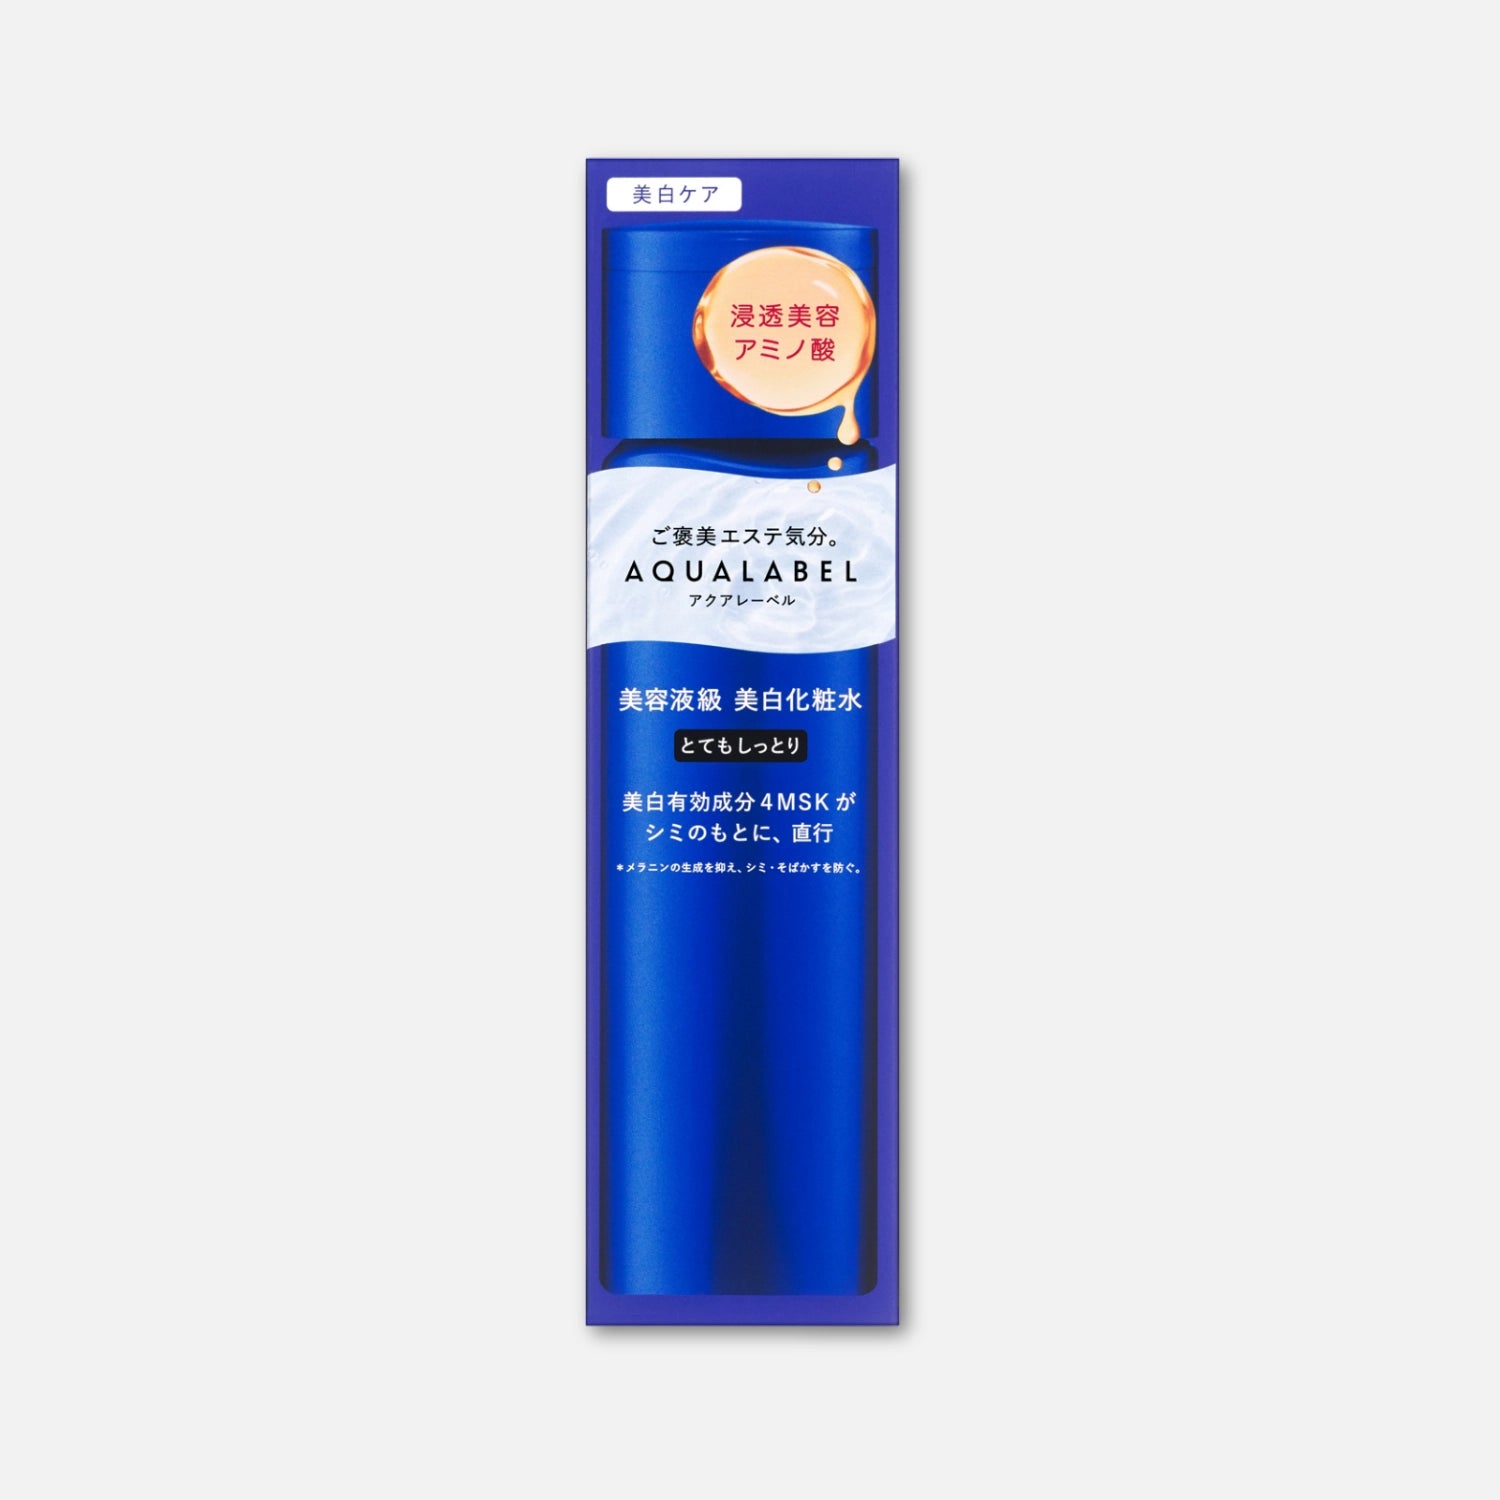 Shiseido AQUALABEL Treatment Lotion Brightening 170ml